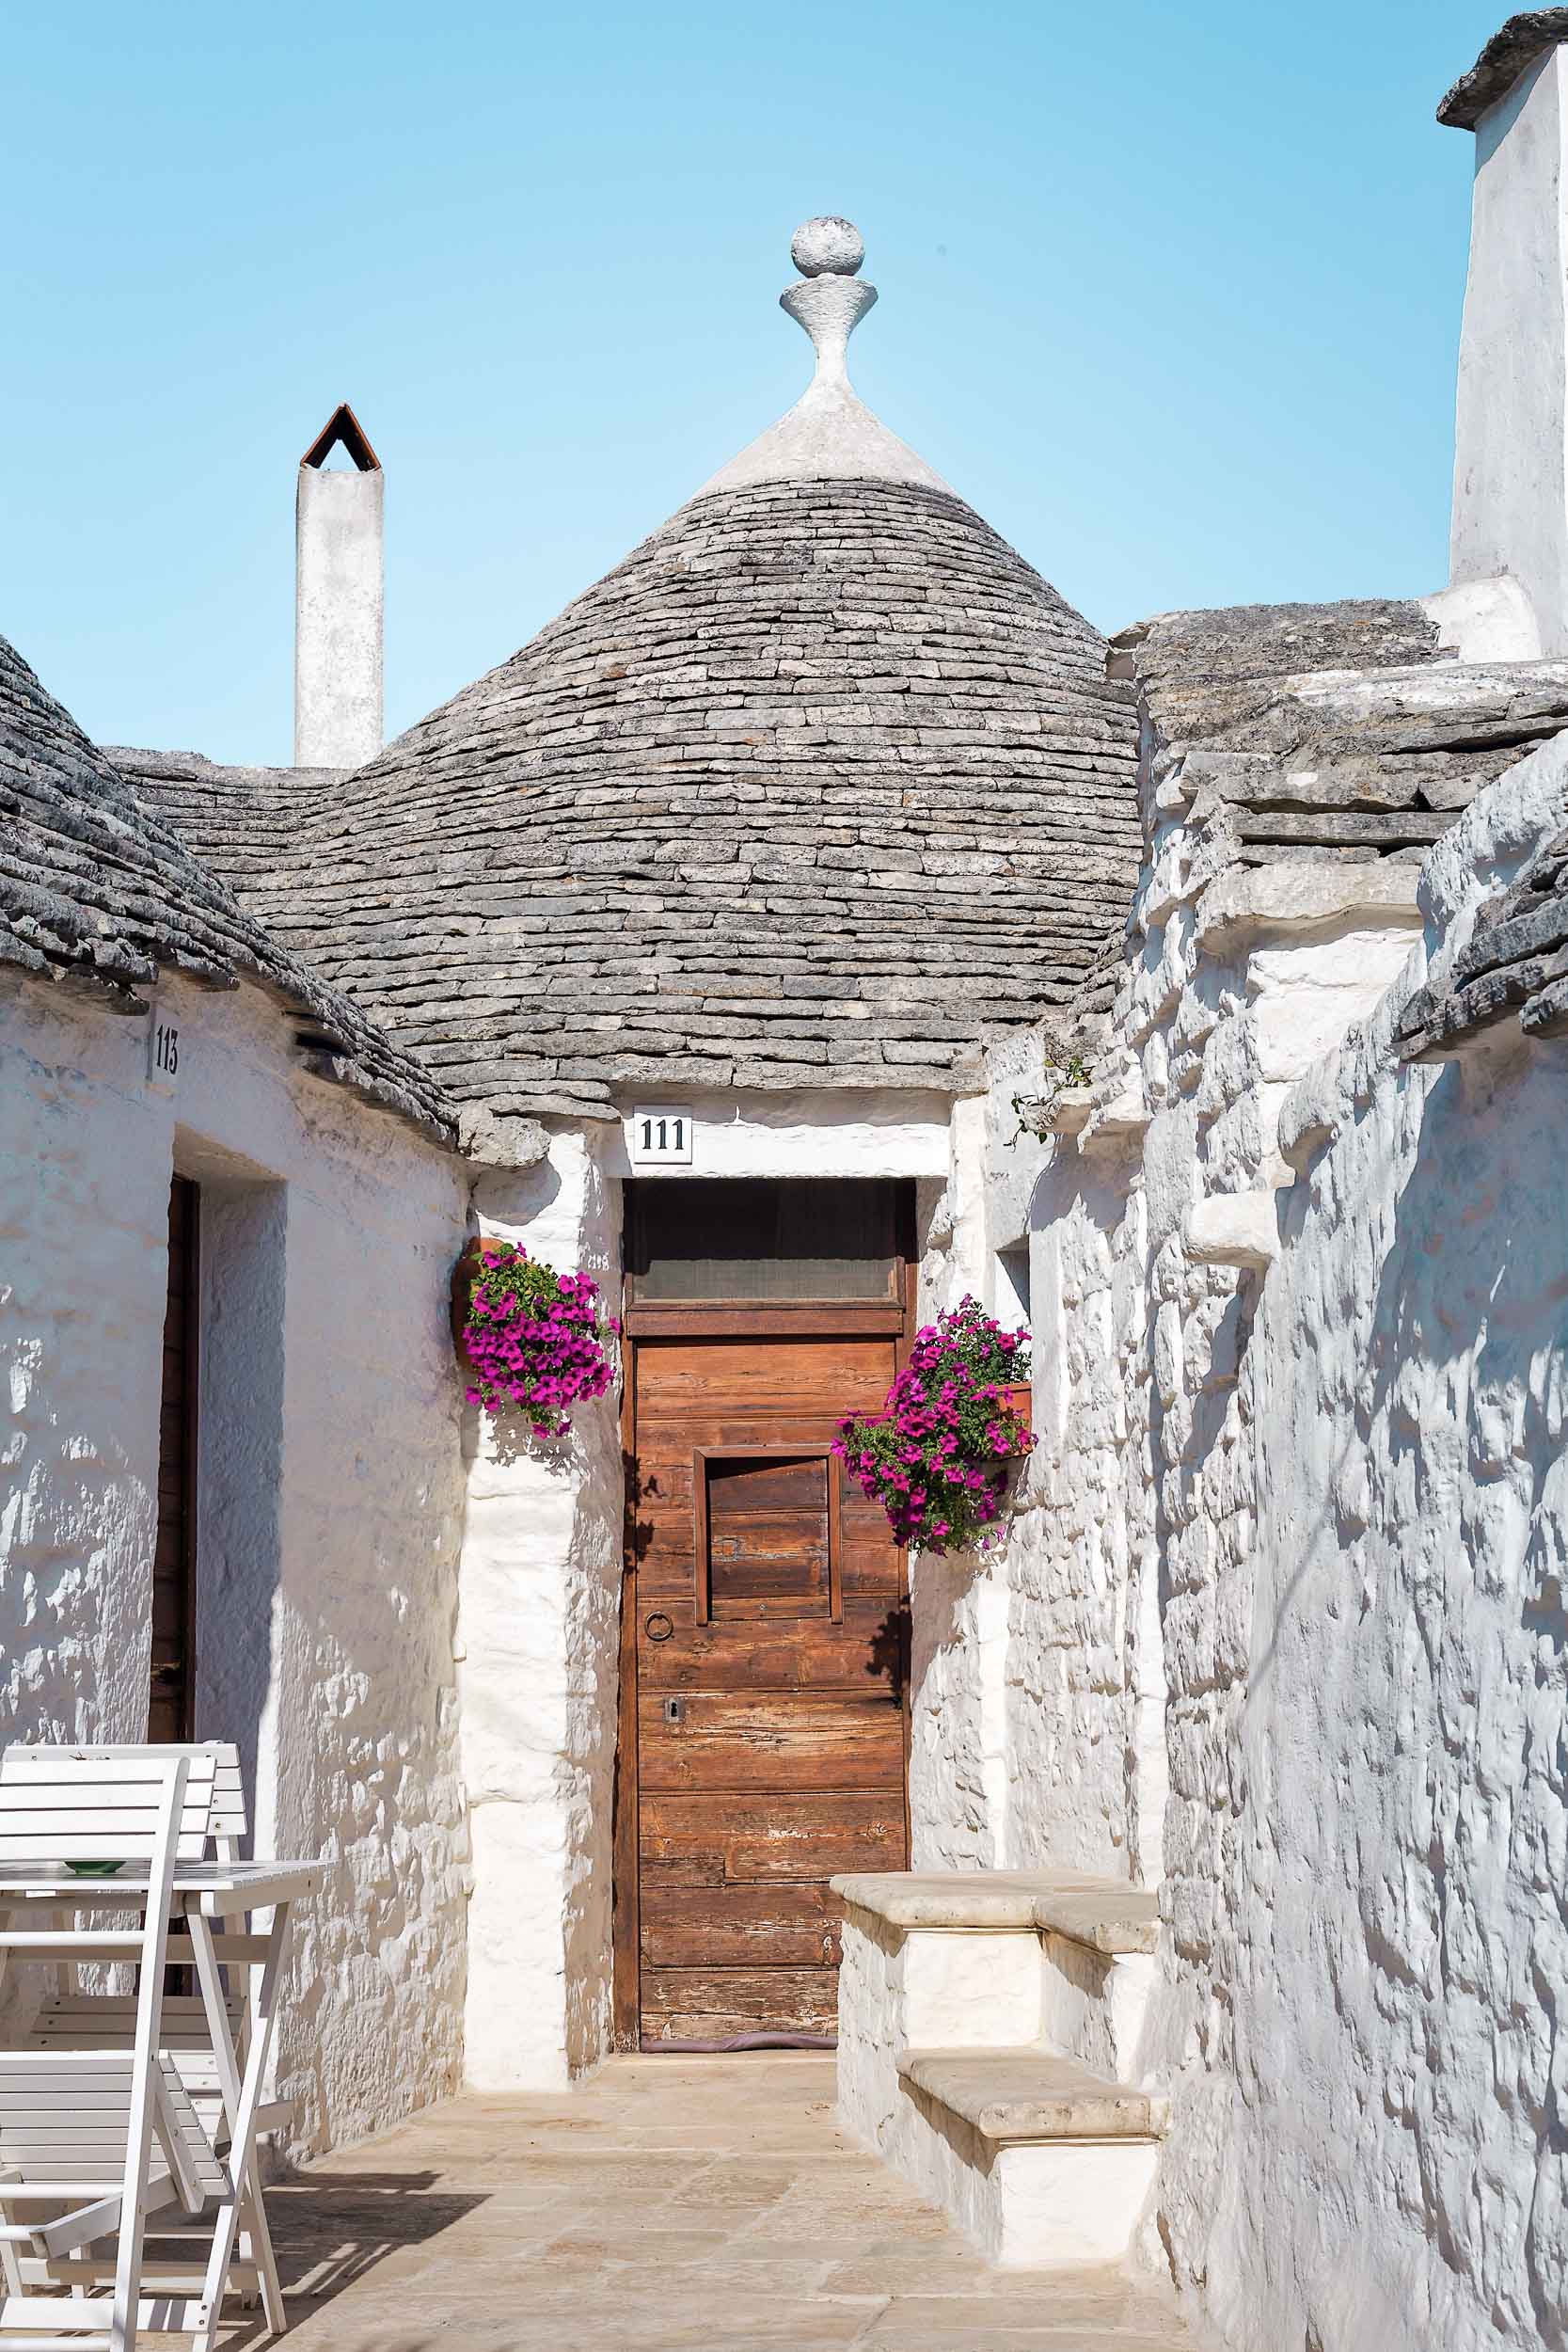 Where to stay in Alberobello, Italy